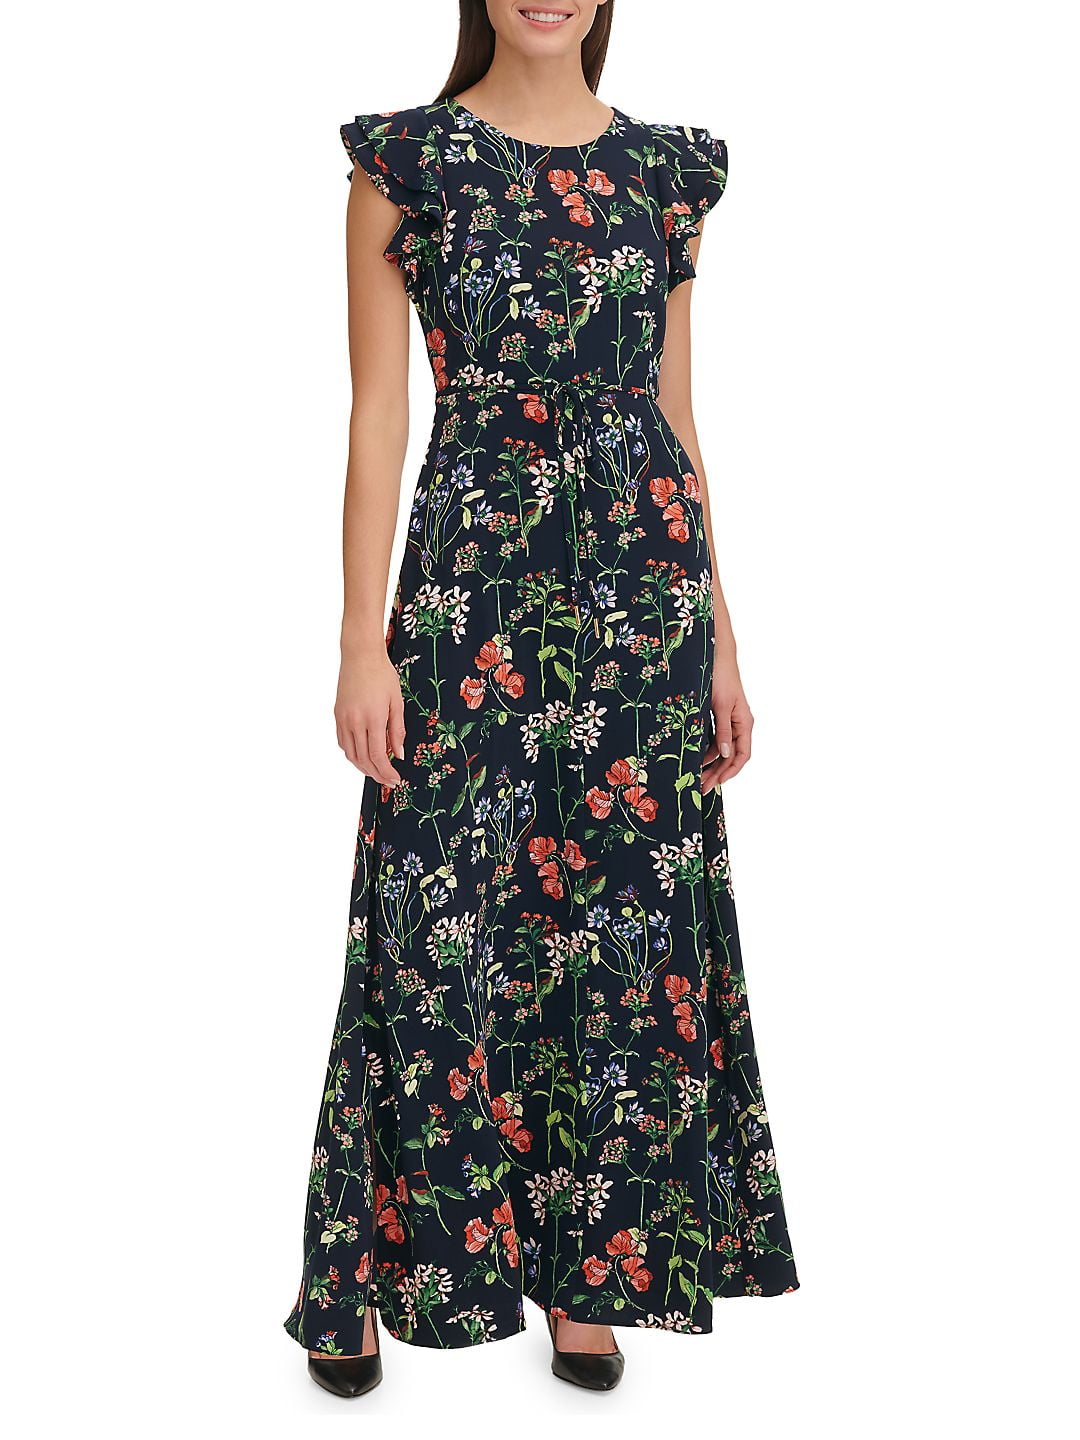 Tommy Hilfiger - Gala Botanical Maxi Dress - Walmart.com - Walmart.com